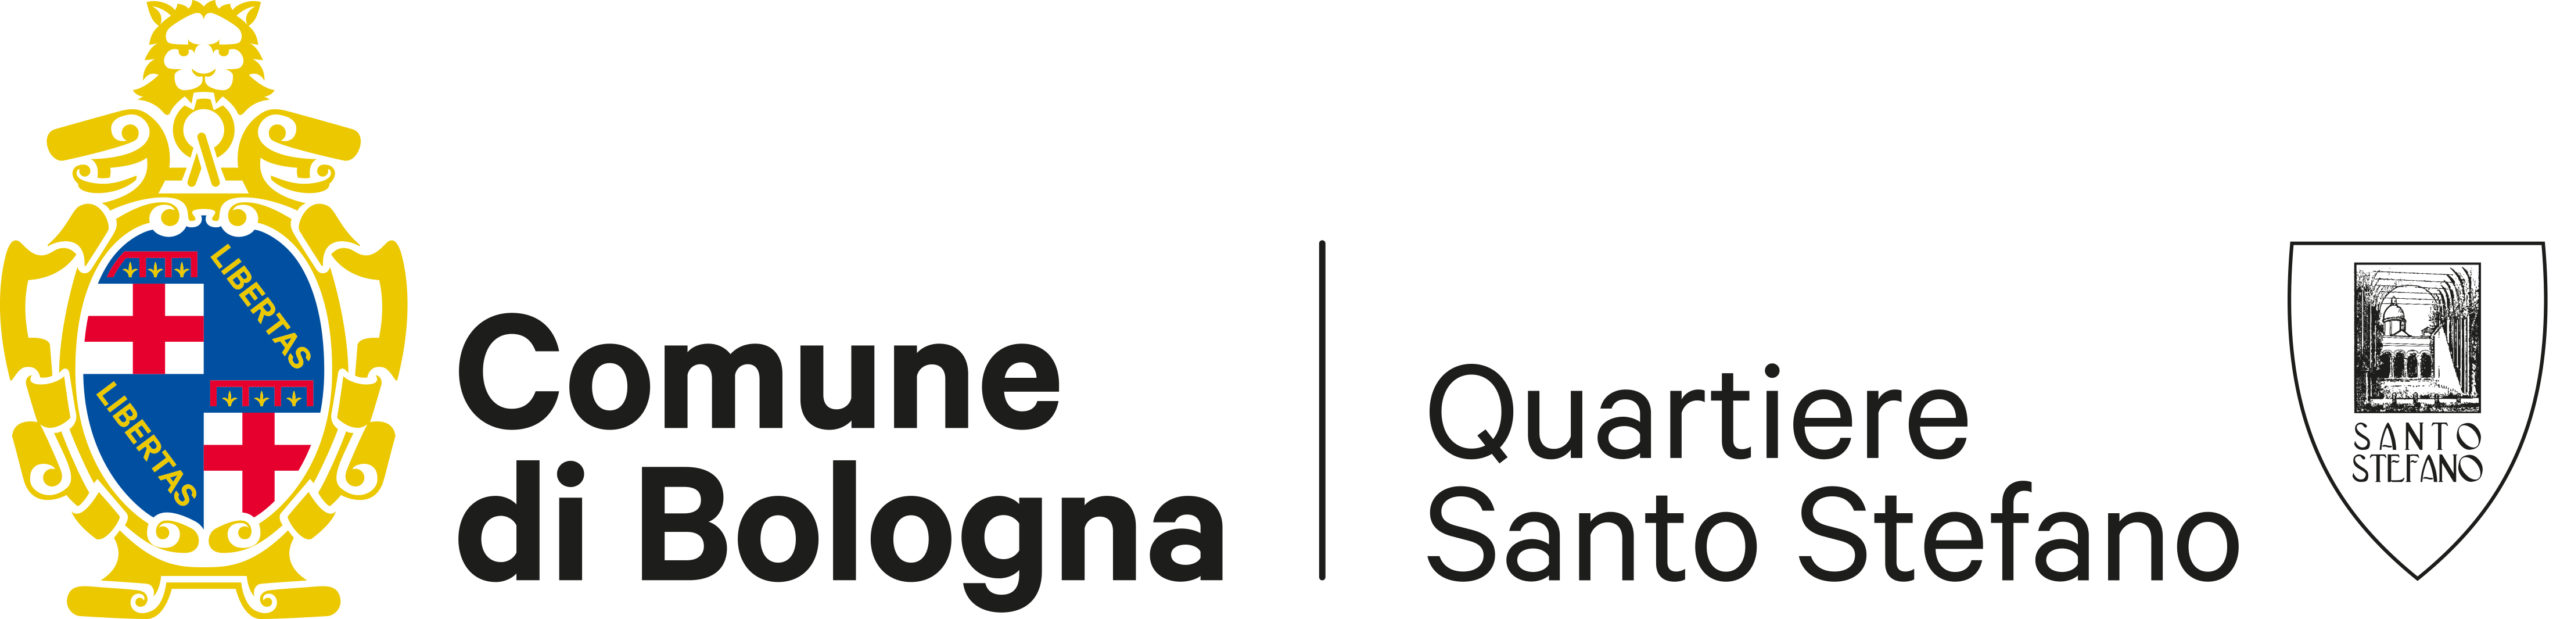 Logo Comune di Bologna+Quartiere Santo Stefano MASTRO RGB